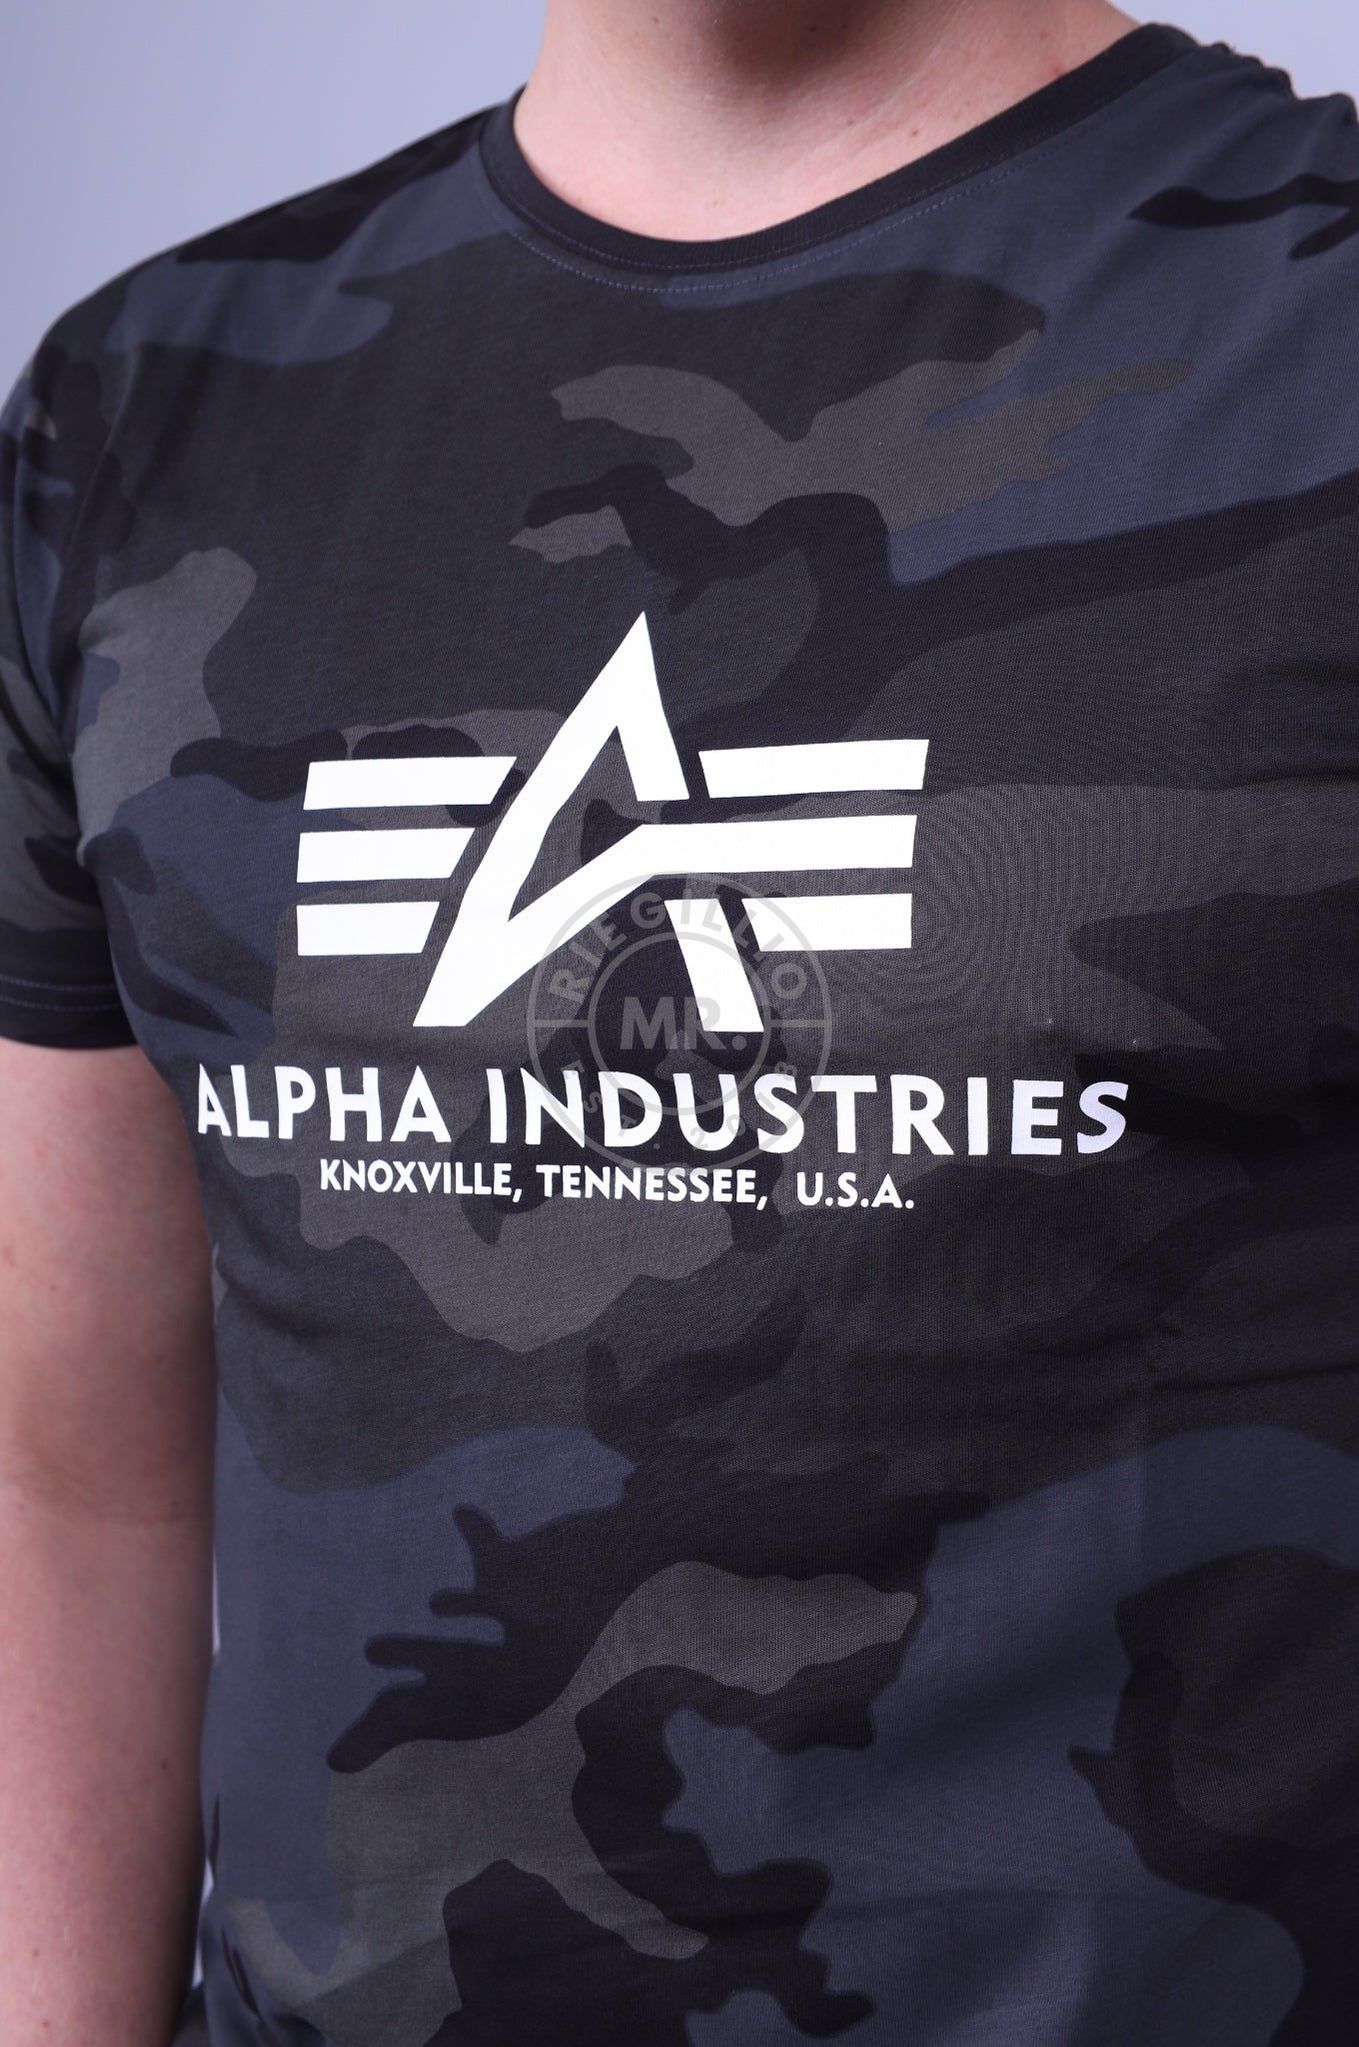 Alpha Industries Basic T-Shirt Black Camo